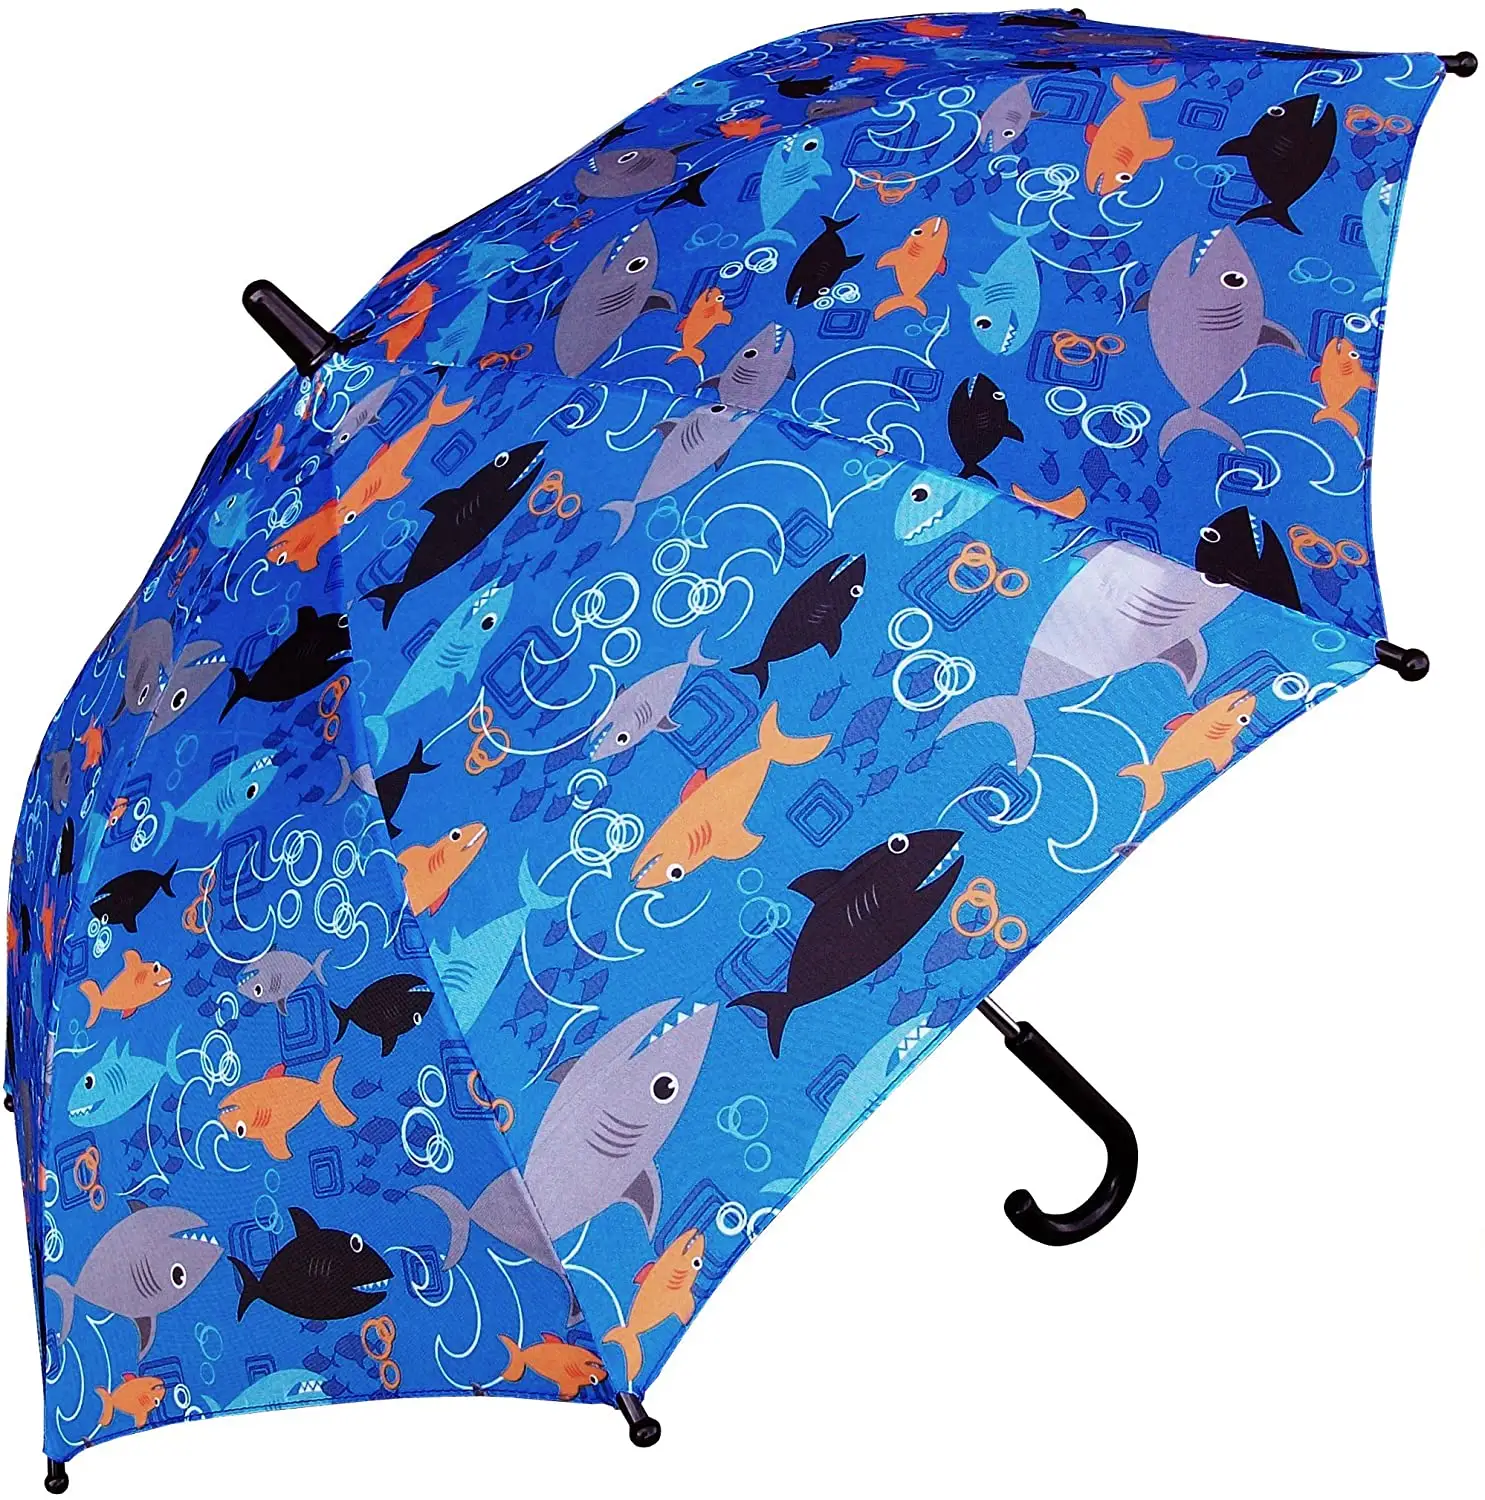 Penuh Pencetakan Sublimasi Lucu Anak Kecil Payung Sea World Printing Cute Anak Payung